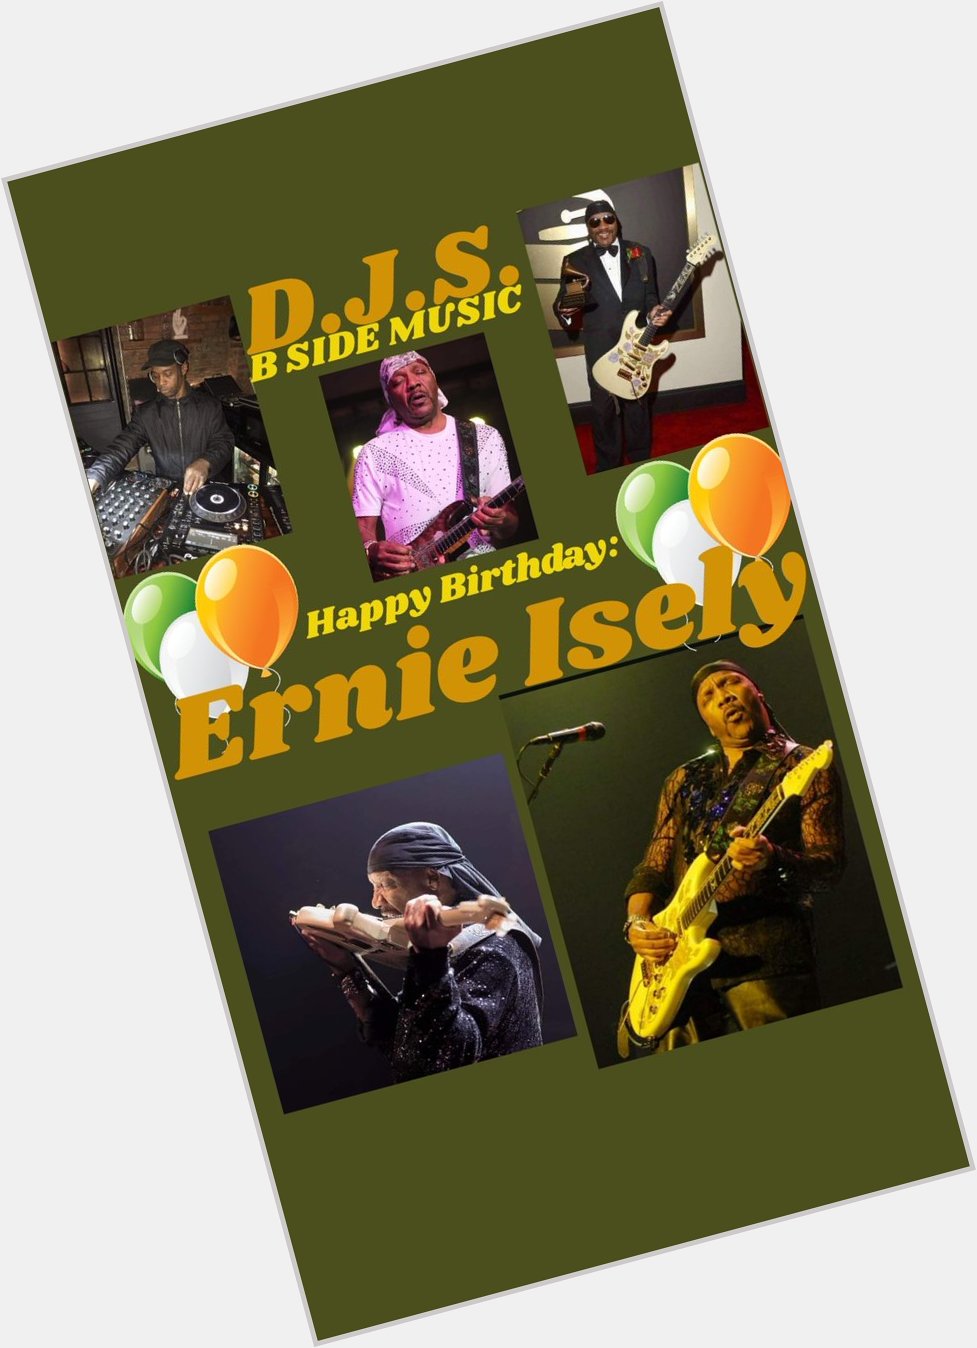 I(D.J.S.)\"B SIDE MUSIC\" saying Happy Birthday to Guitarist/Songwriter: \"ERNIE ISLEY\"!!!! 